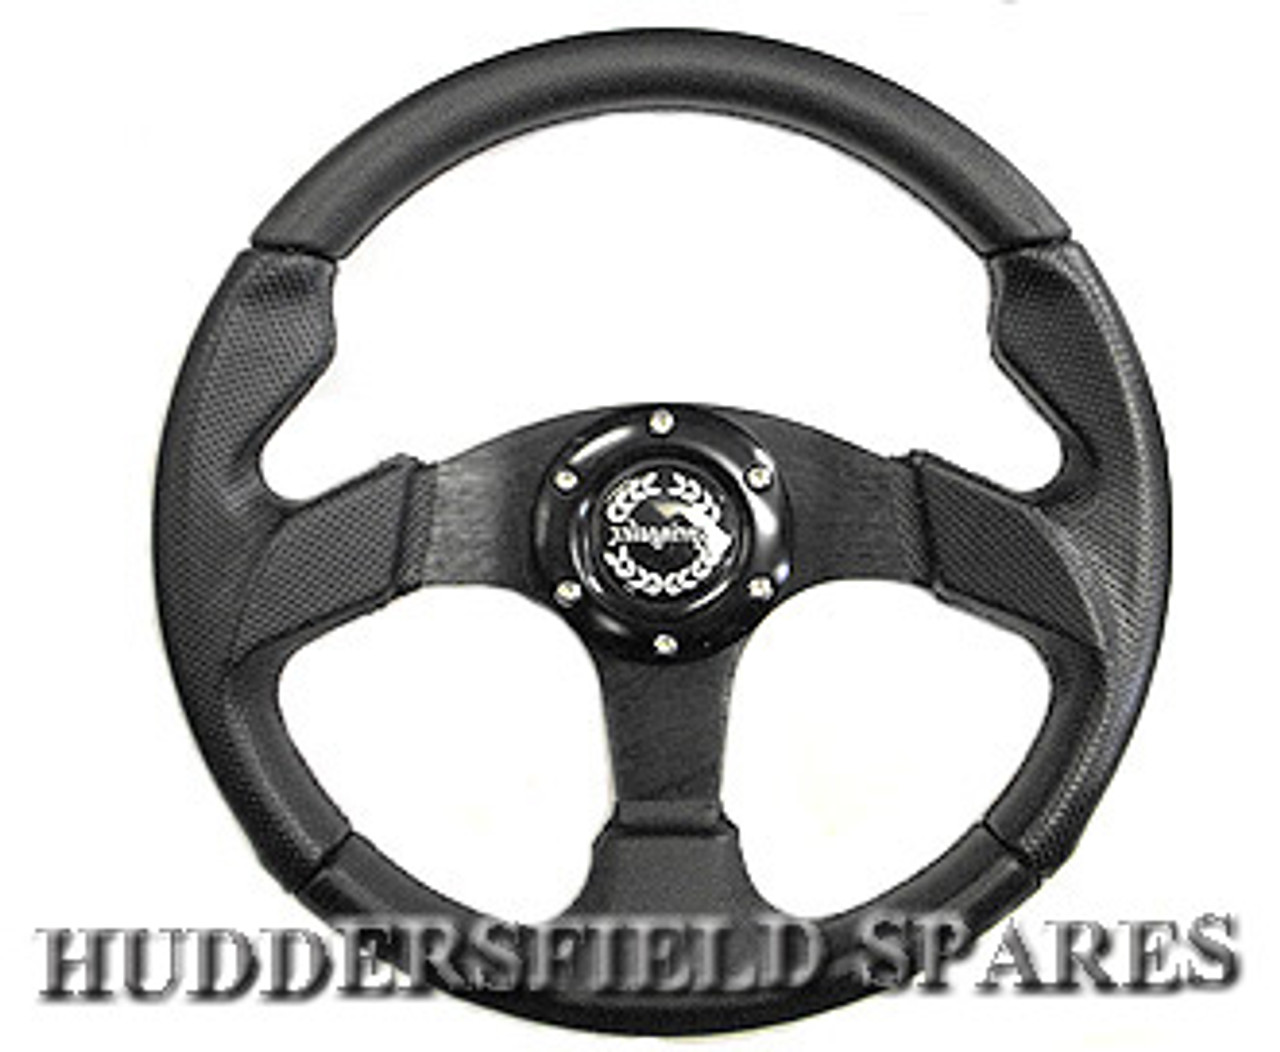 13" race type steering wheel